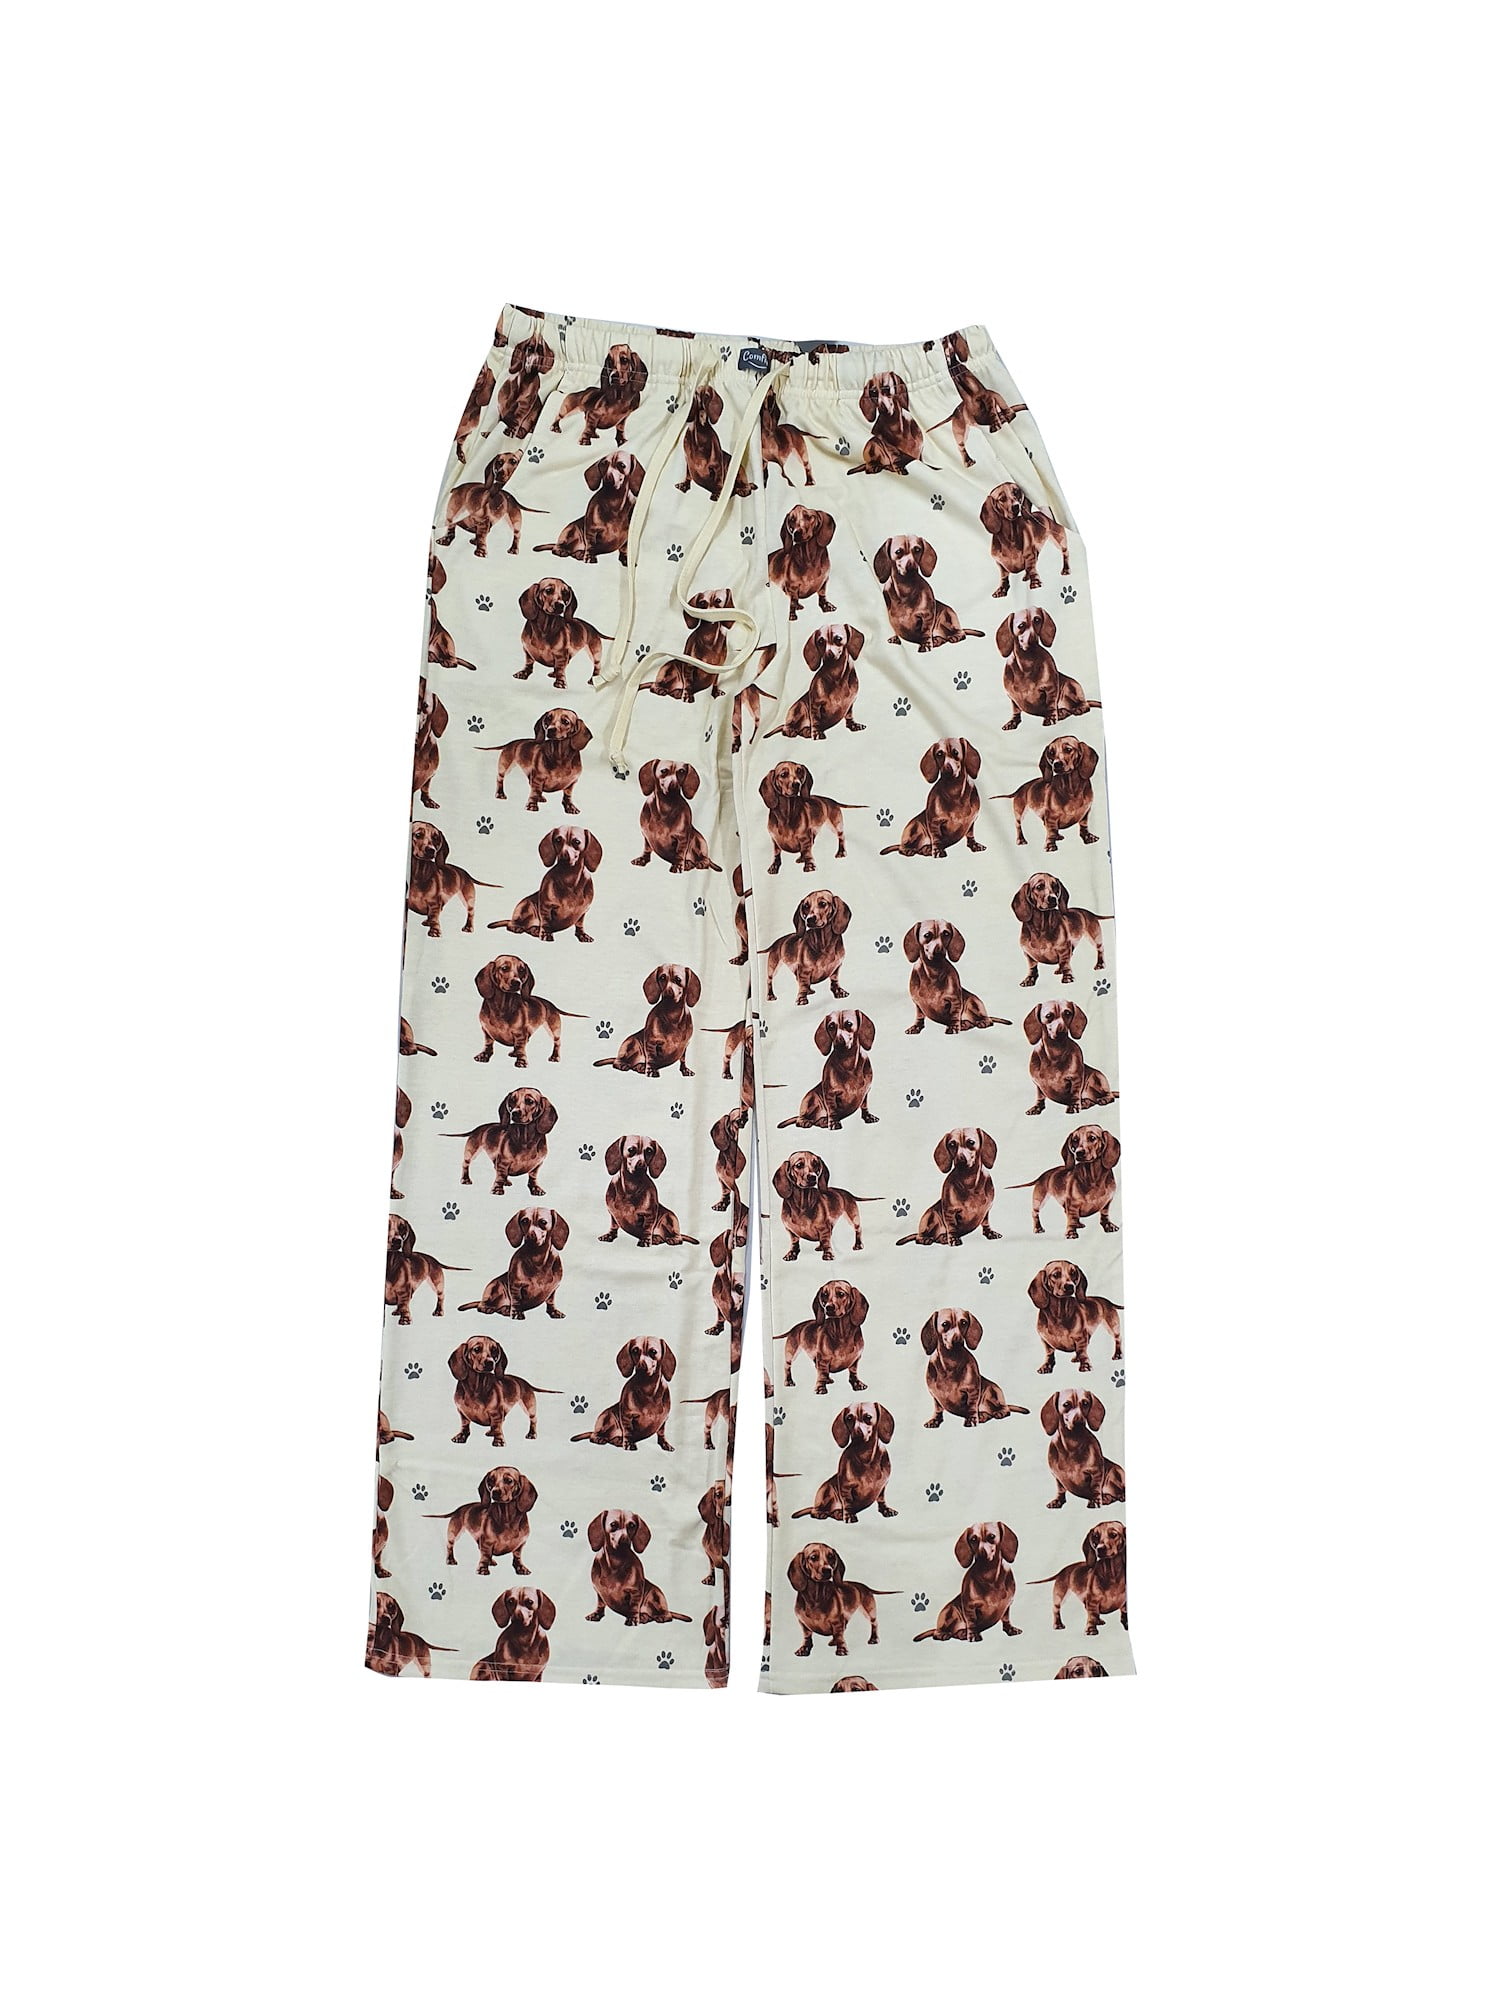 ALAZA Hipter Puppy Dog Animal Pug Women/'s Pajama Lounge Pants Casual Stretch Pants Wide Leg